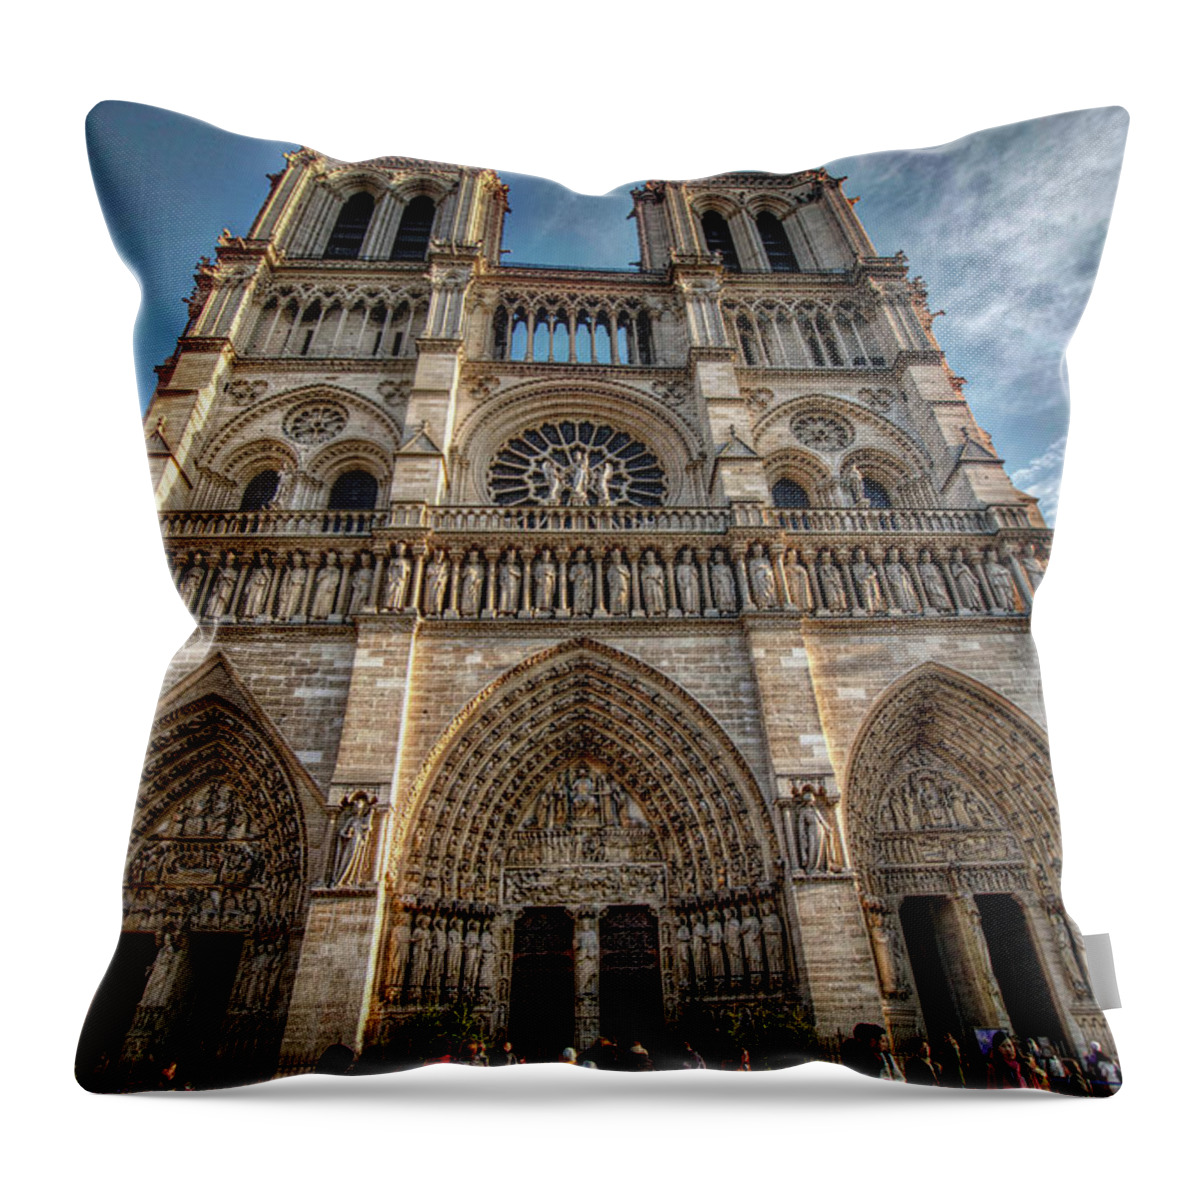 Paris France Throw Pillow featuring the photograph Paris France #46 by Paul James Bannerman